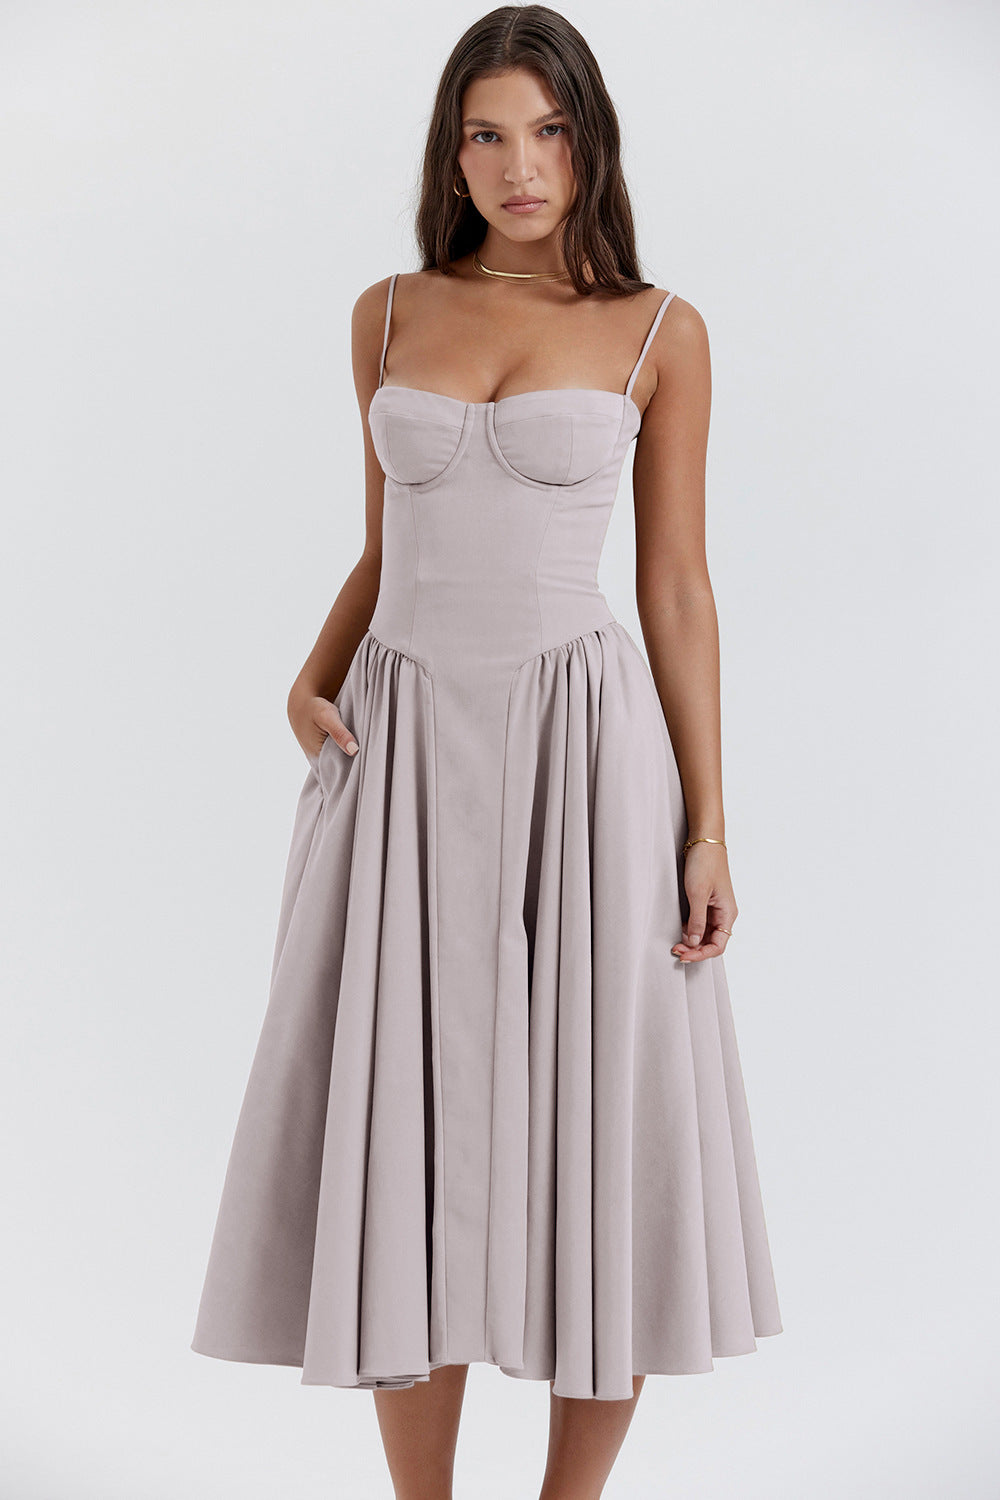 Suspender Dress Summer Elegant Low-cut Slim Backless Sling Dress For Women Clothing Party Evening